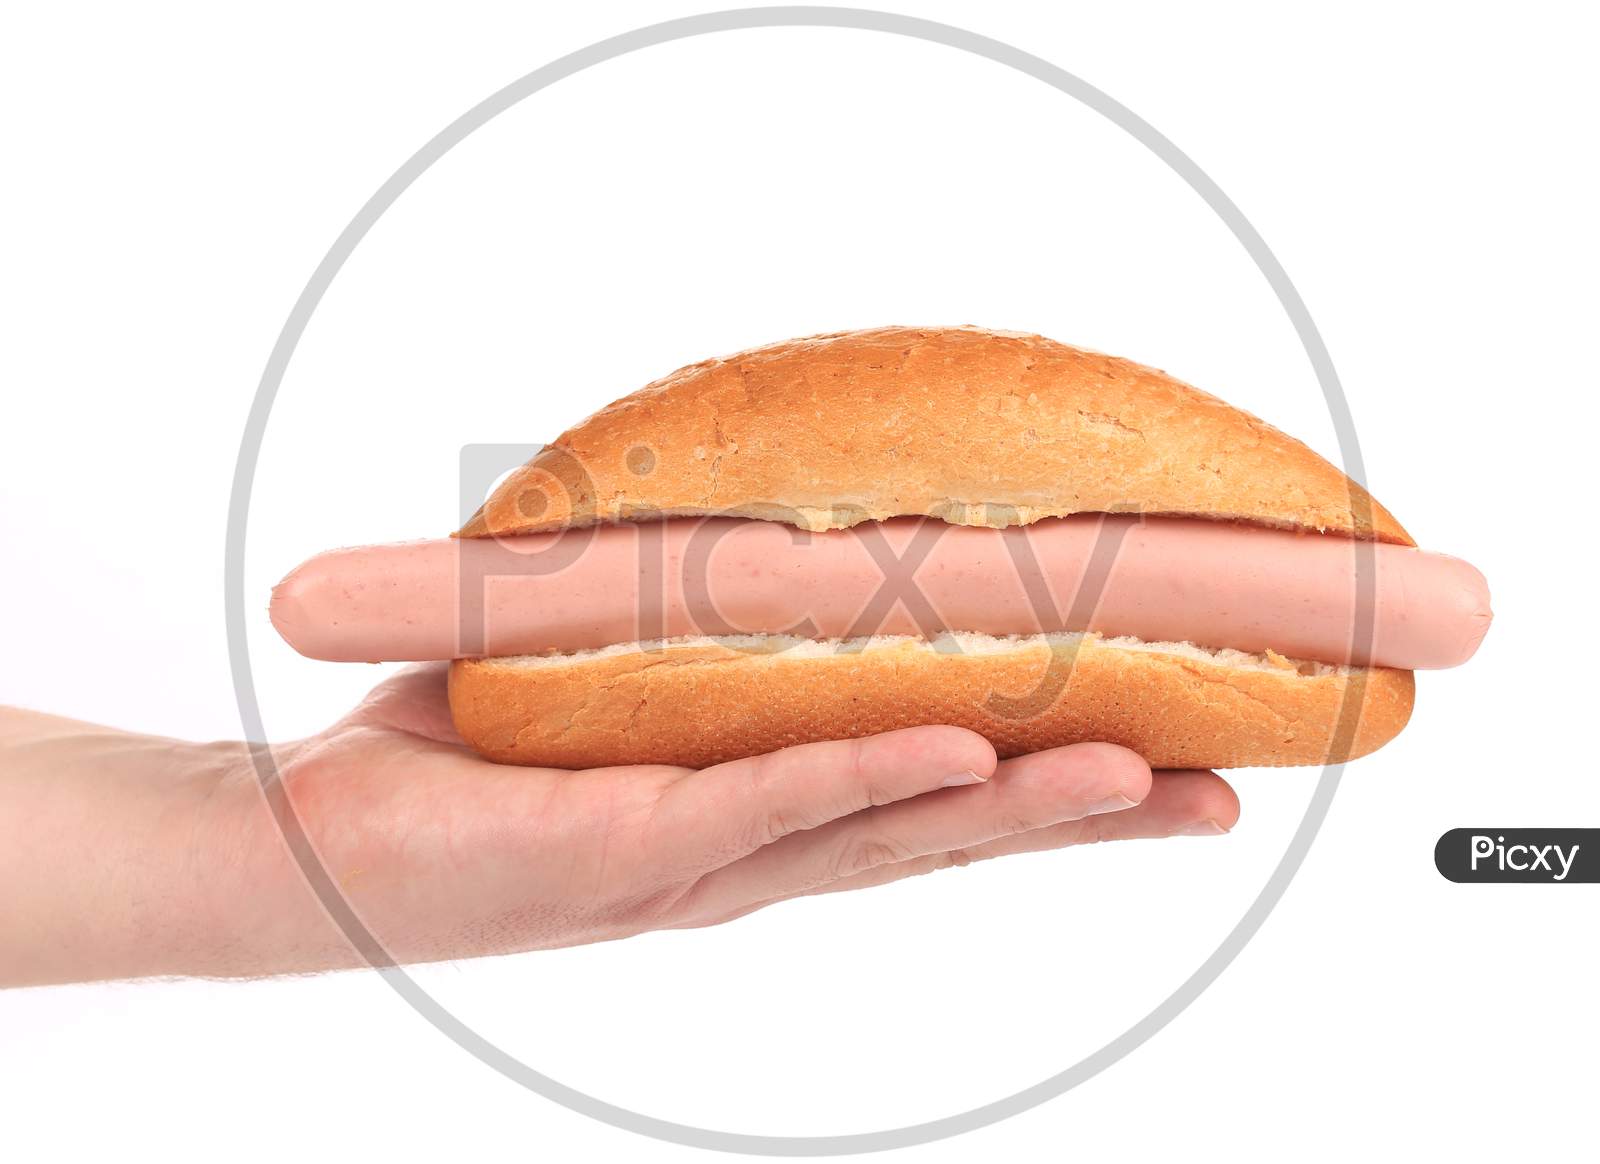 Hand Holds Big Hotdog. Isolated On A White Background.